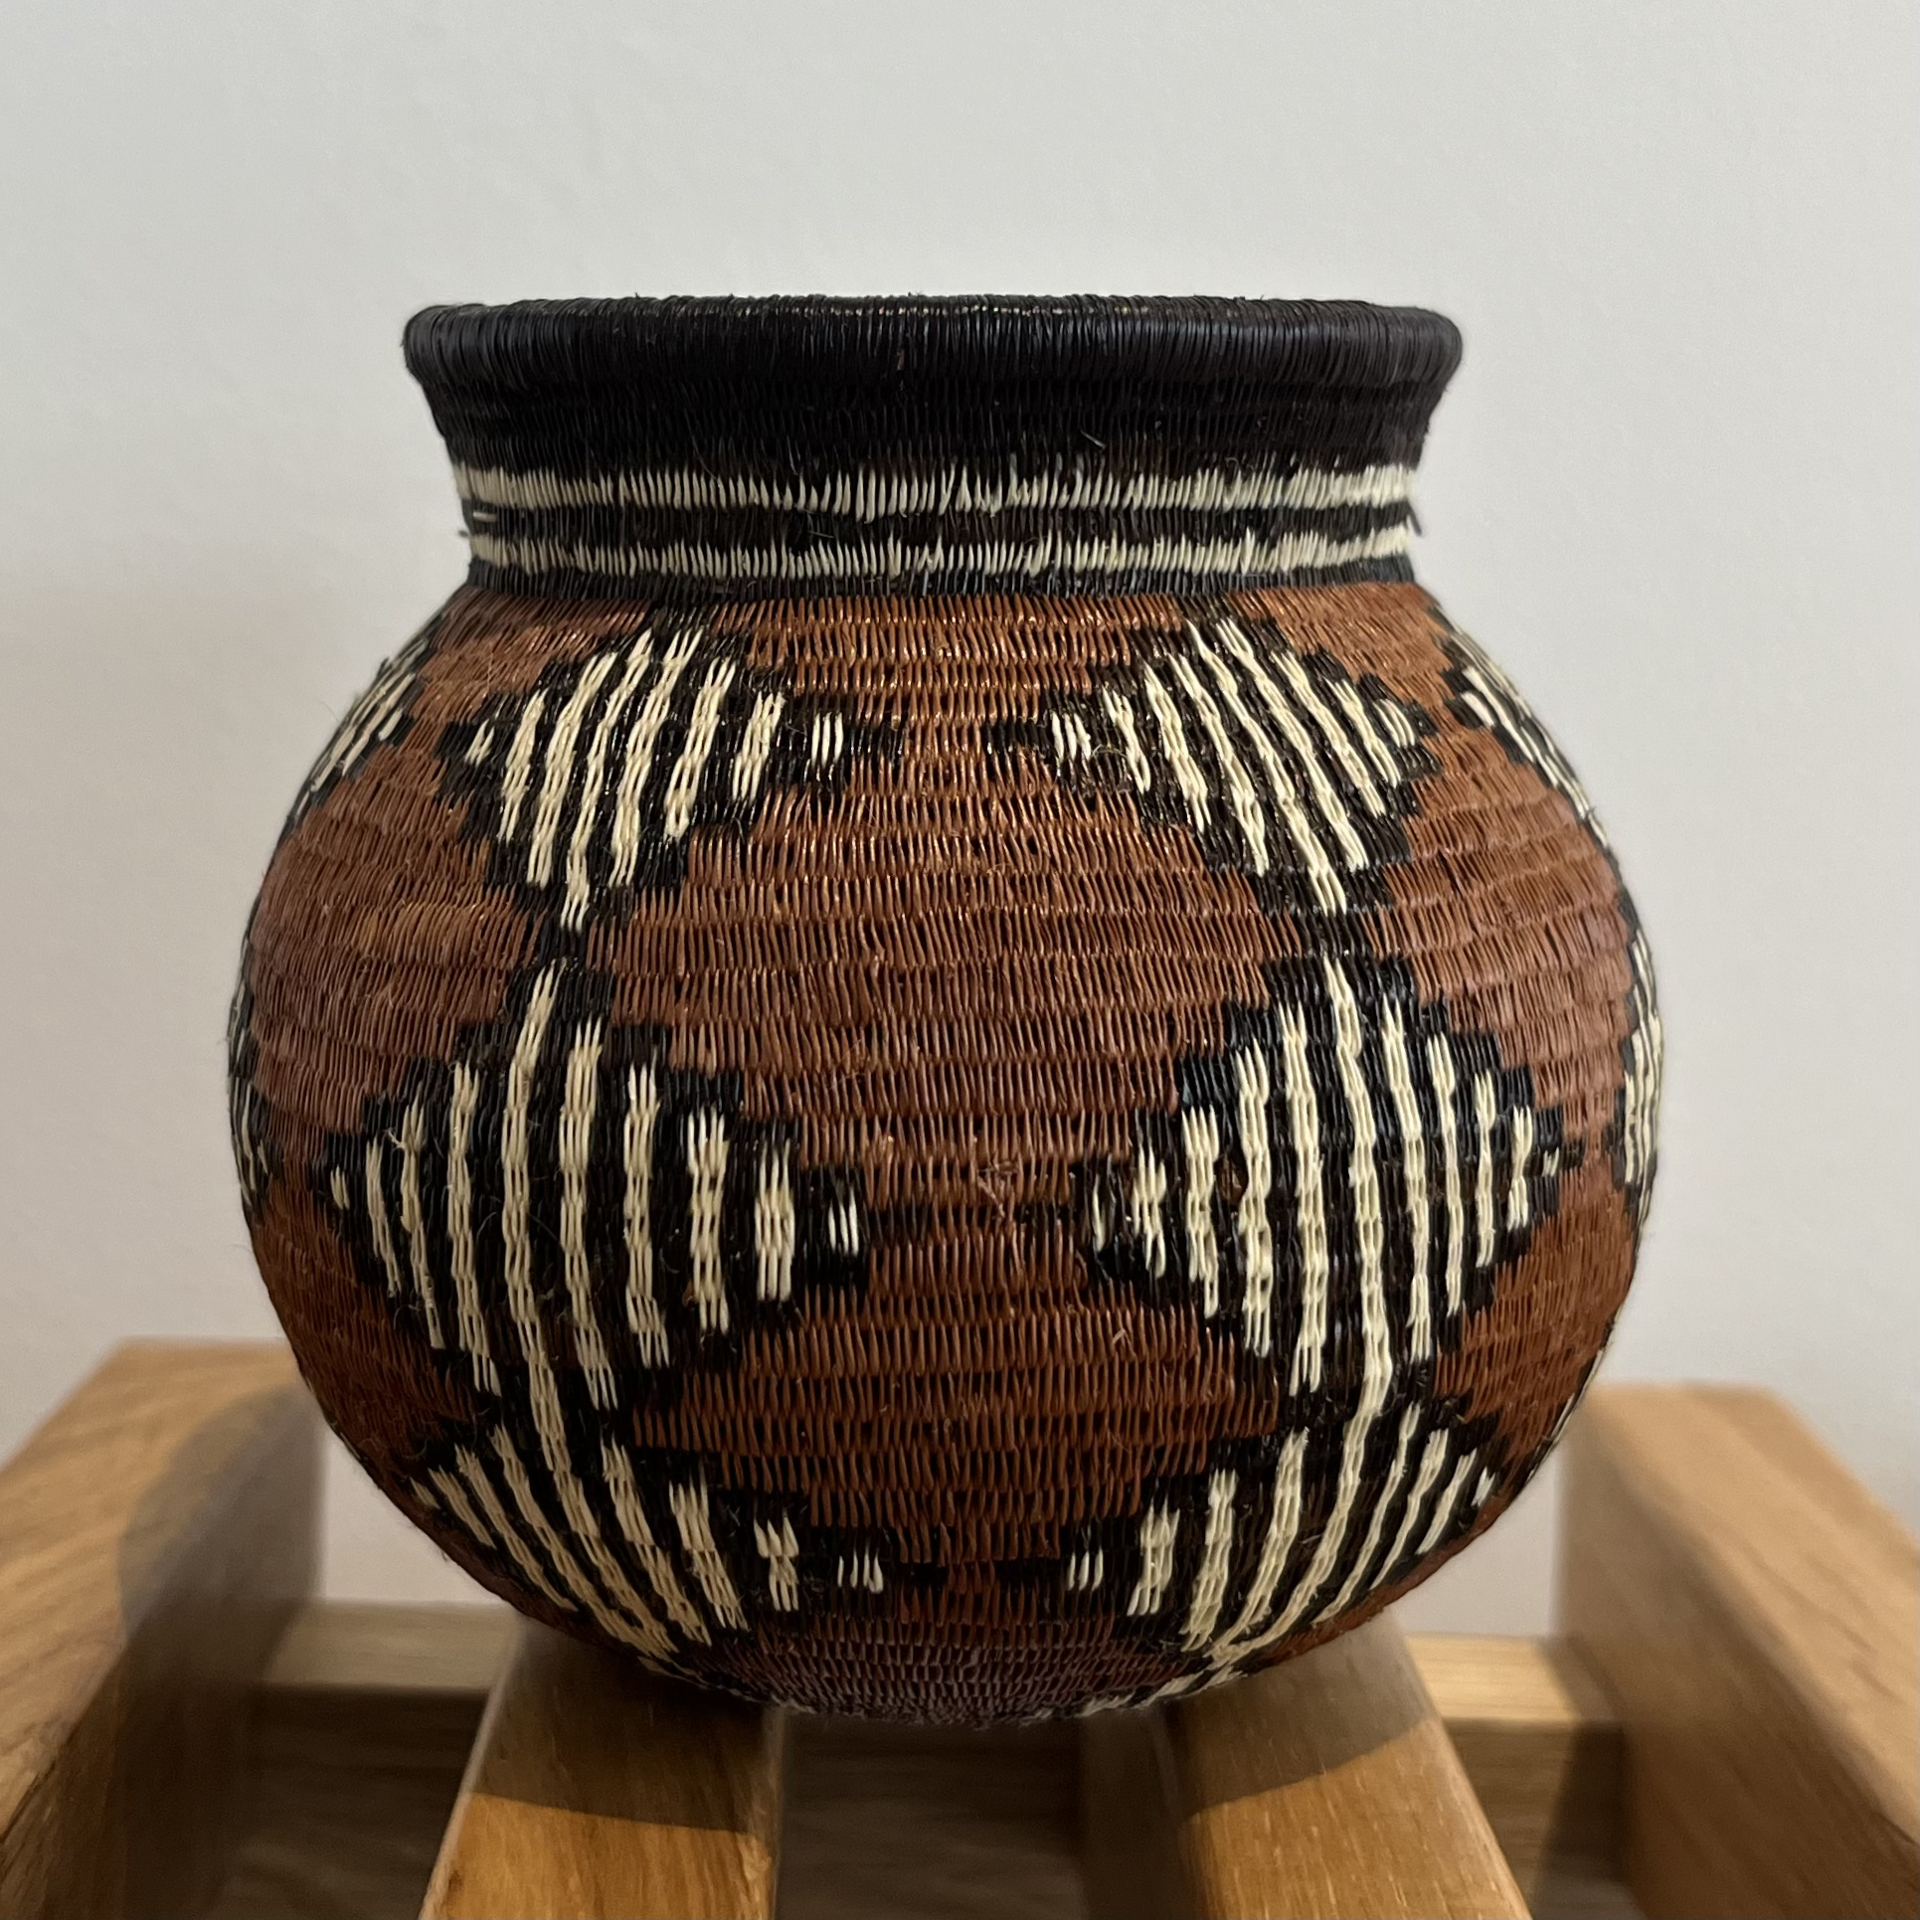 Hösig Di Small Basket by Wounaan Weavers of Panama